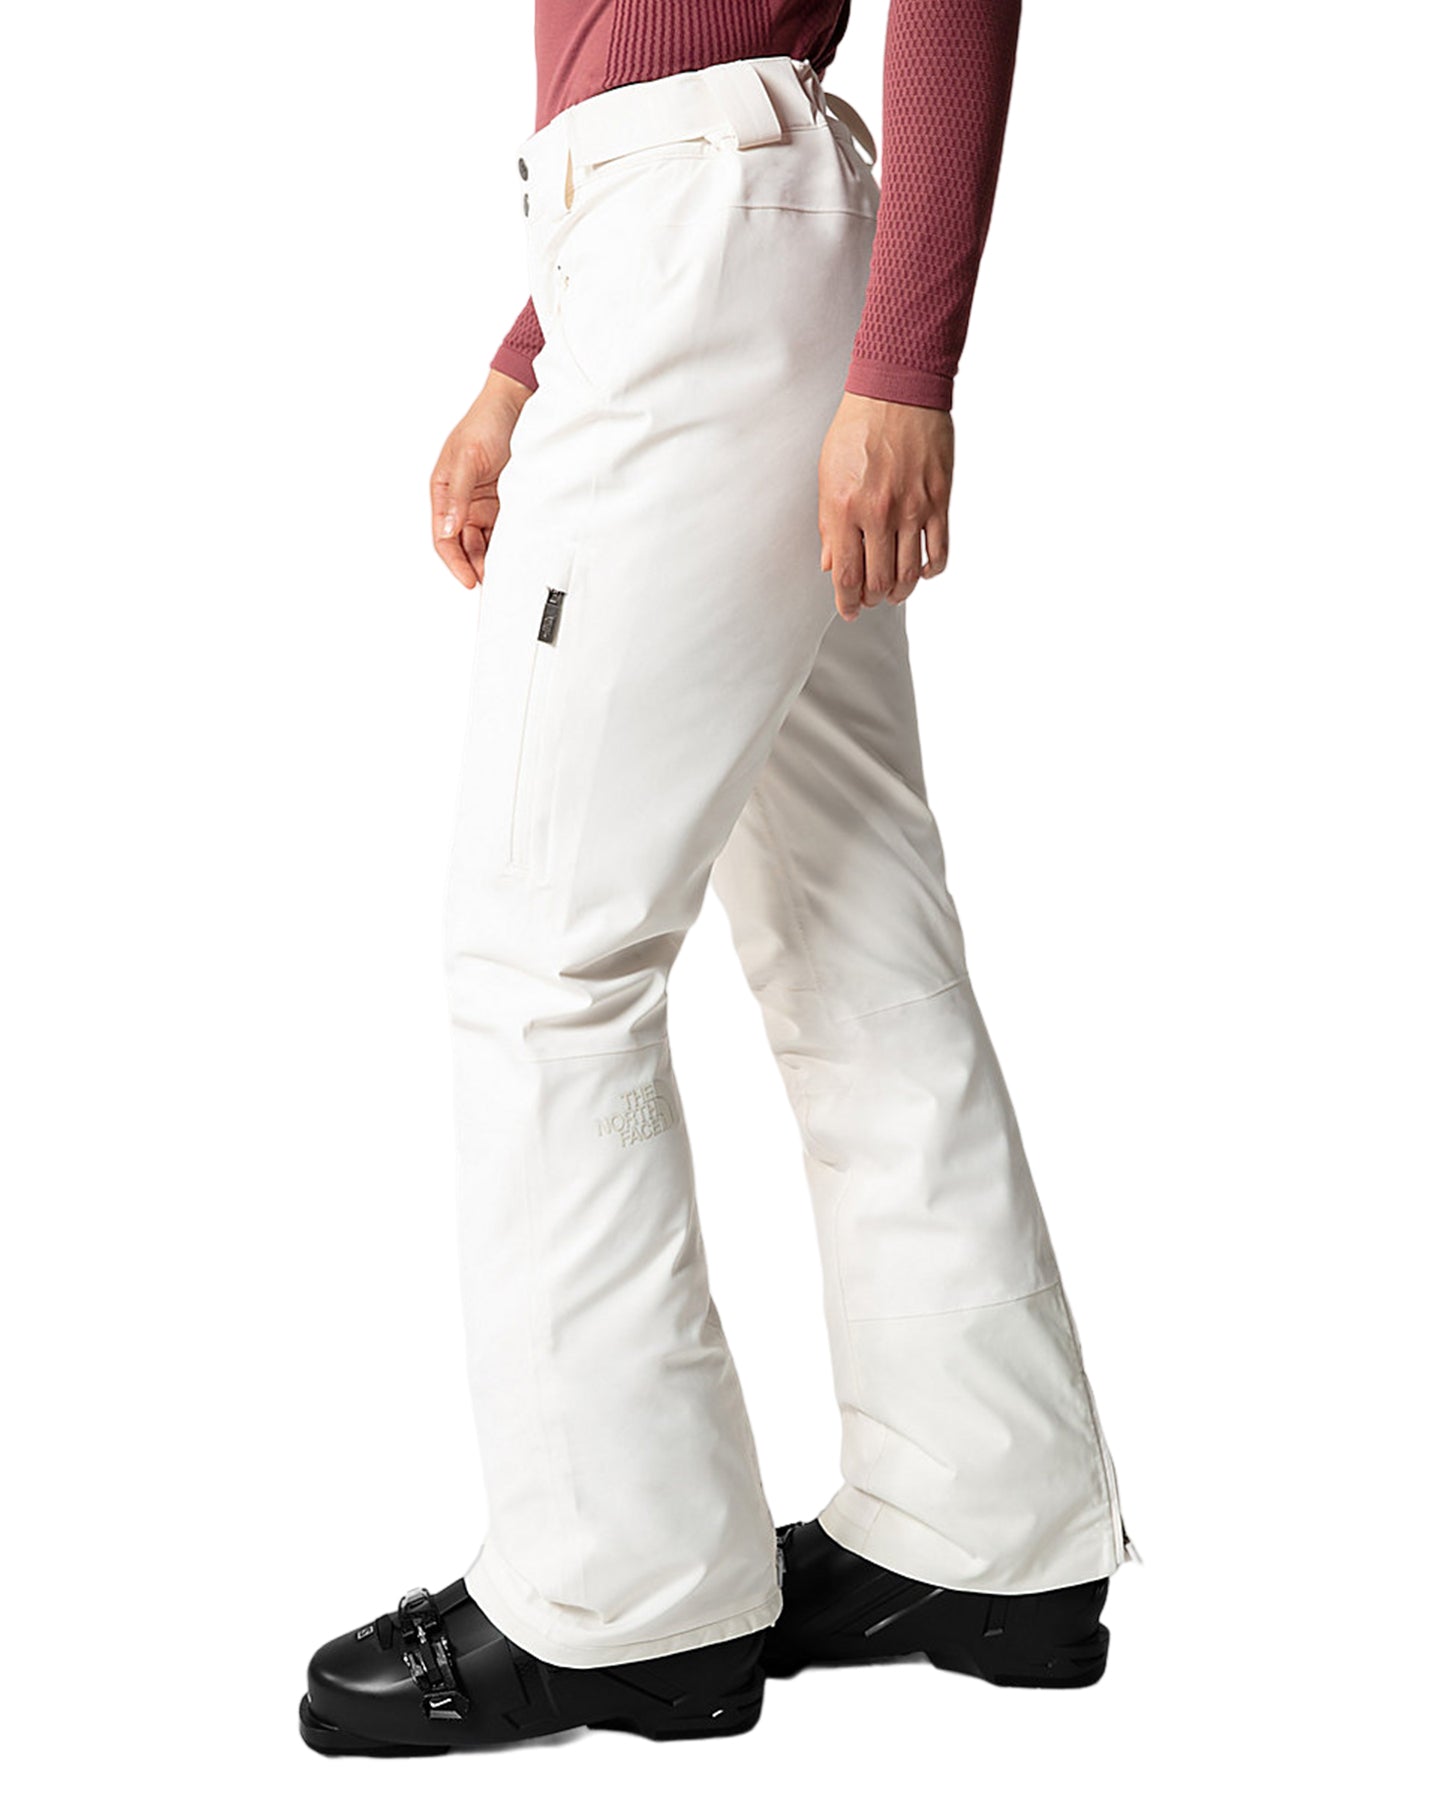 The North Face Women's Lenado Snow Pants - Gardenia White Women's Snow Pants - SnowSkiersWarehouse